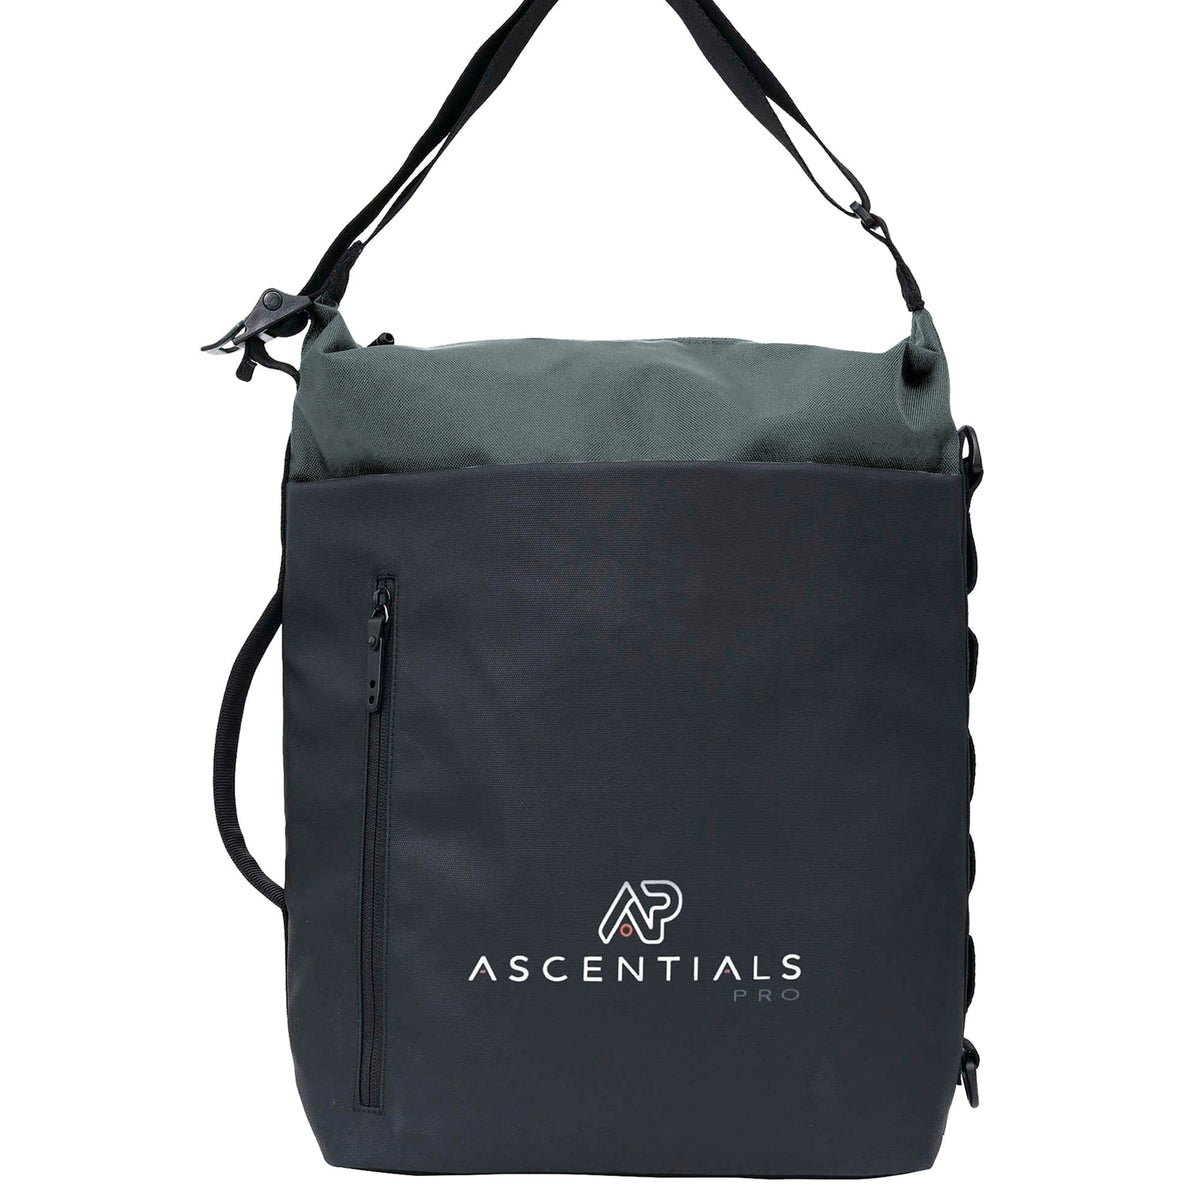 Ascentials Blaze Backpack